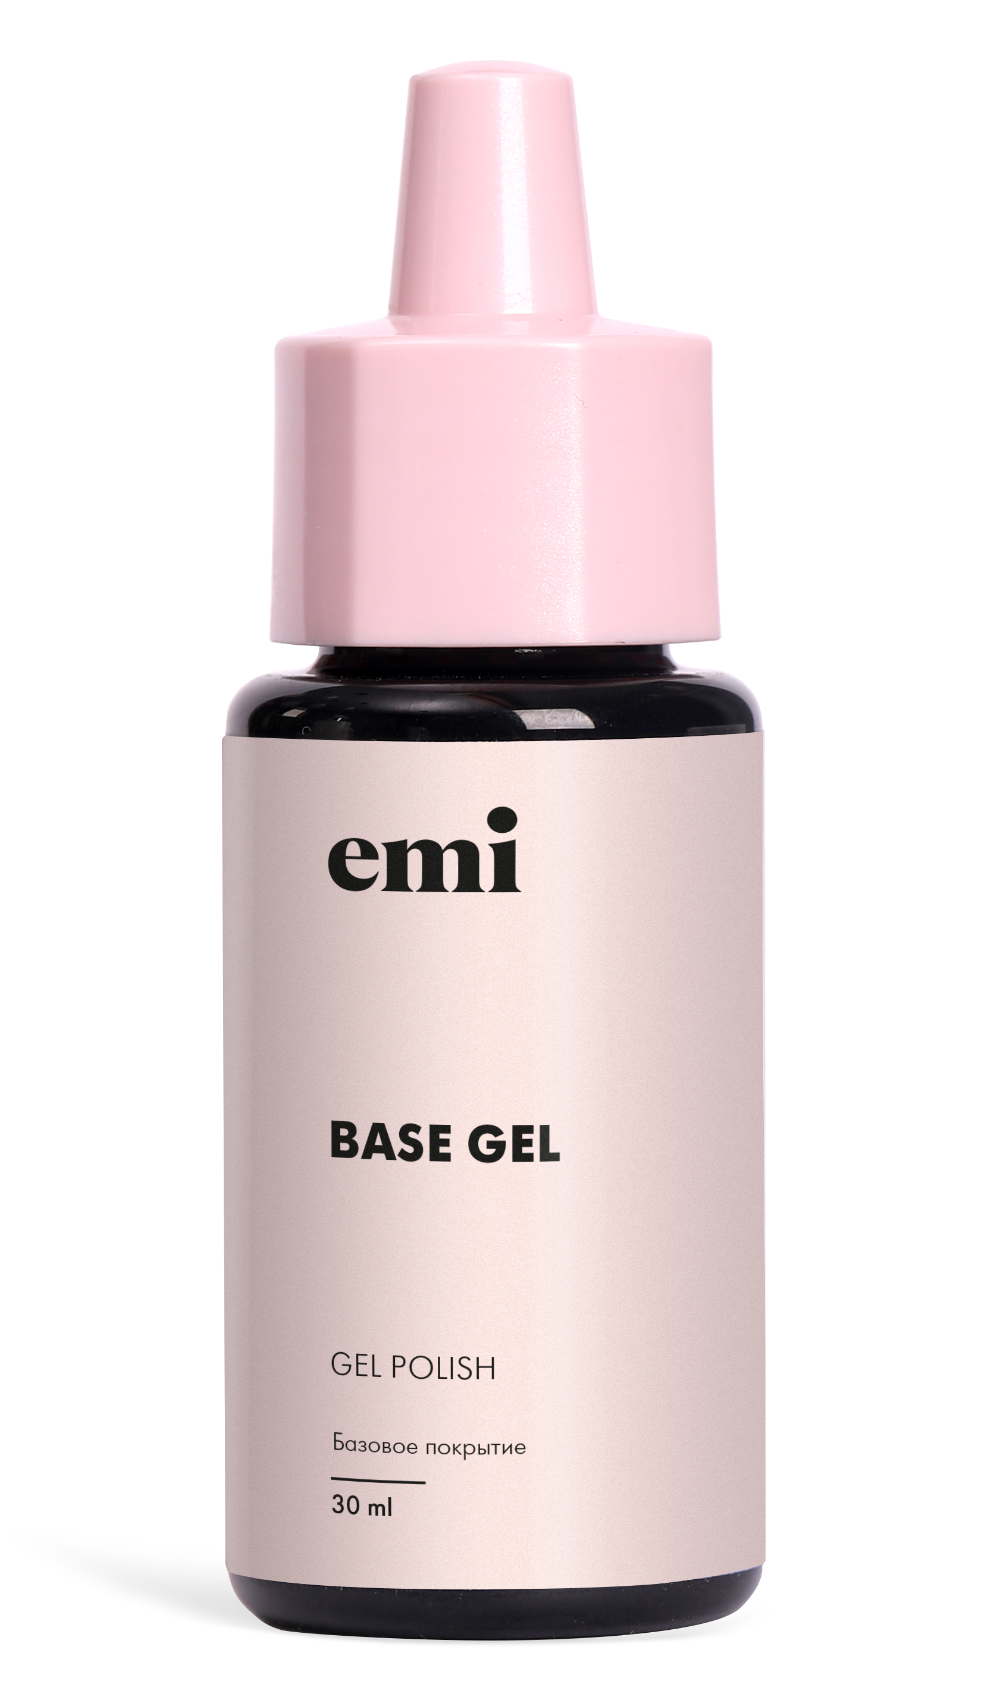 Базовое покрытие для ногтей Emi Base gel 30 мл луи филипп покрытие базовое камуфлирующее 07 rubber base flash 15 гр